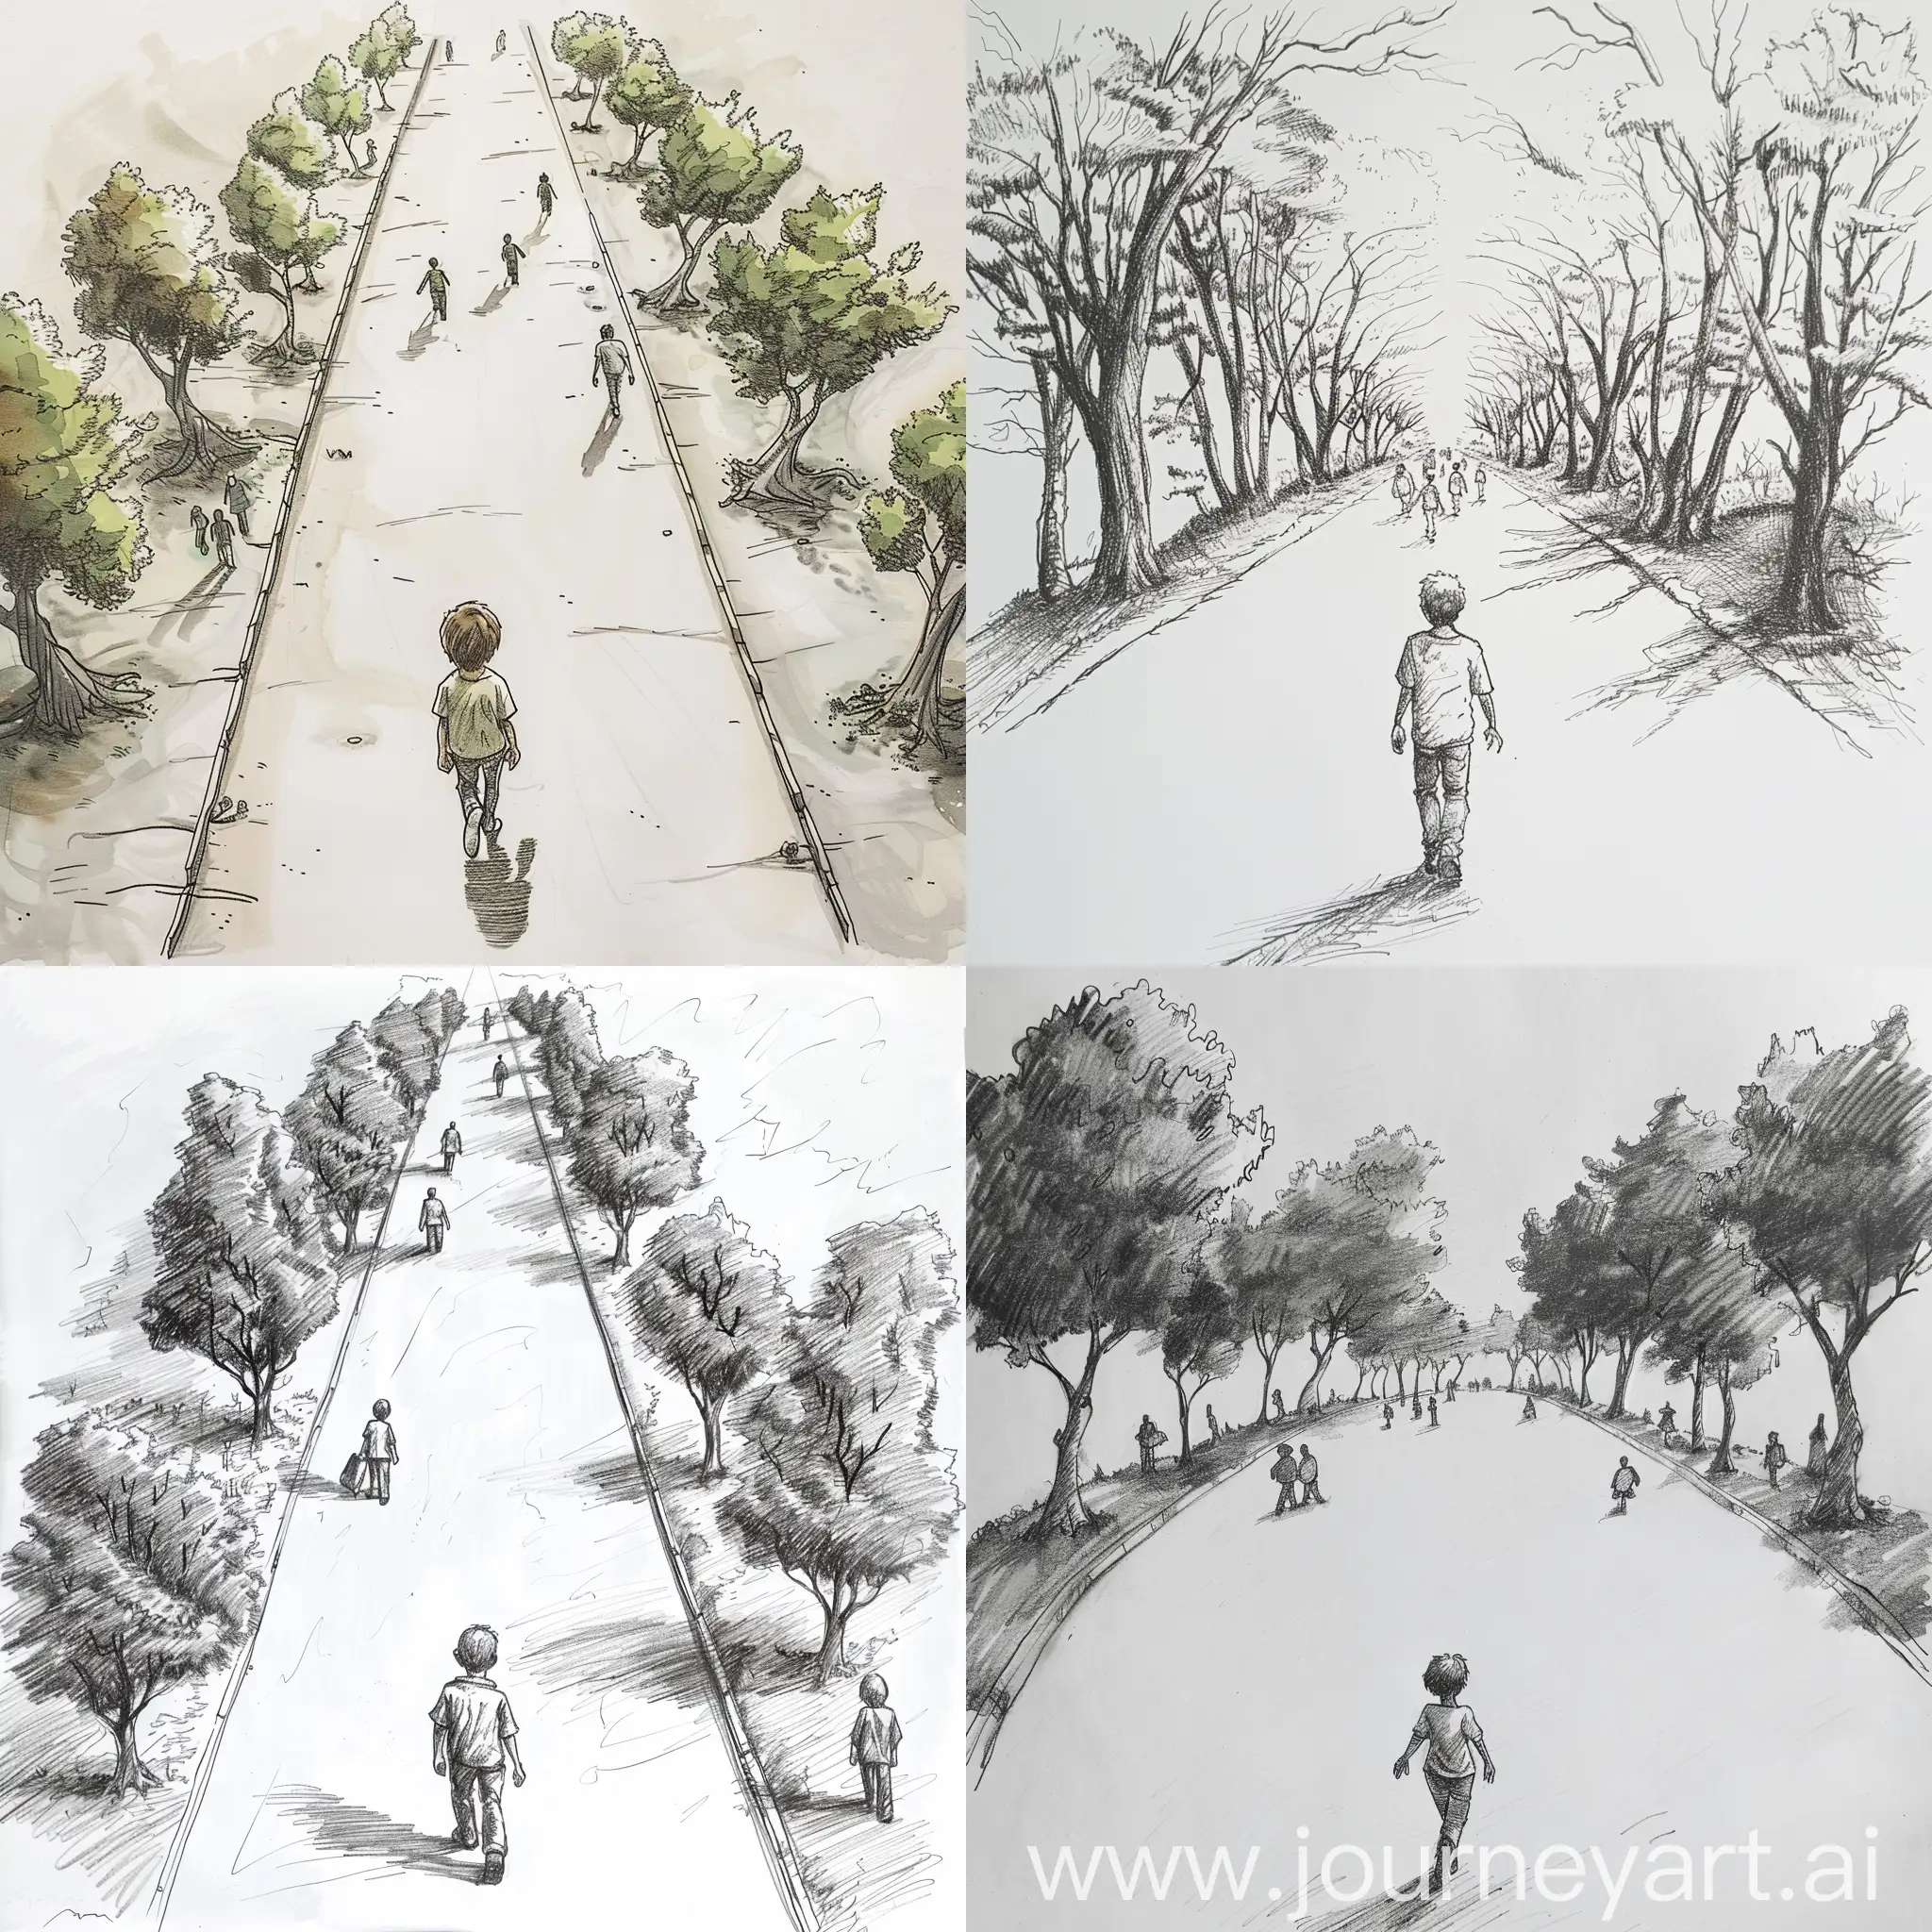 Boy-Walking-Alone-on-TreeLined-Road-with-Passersby